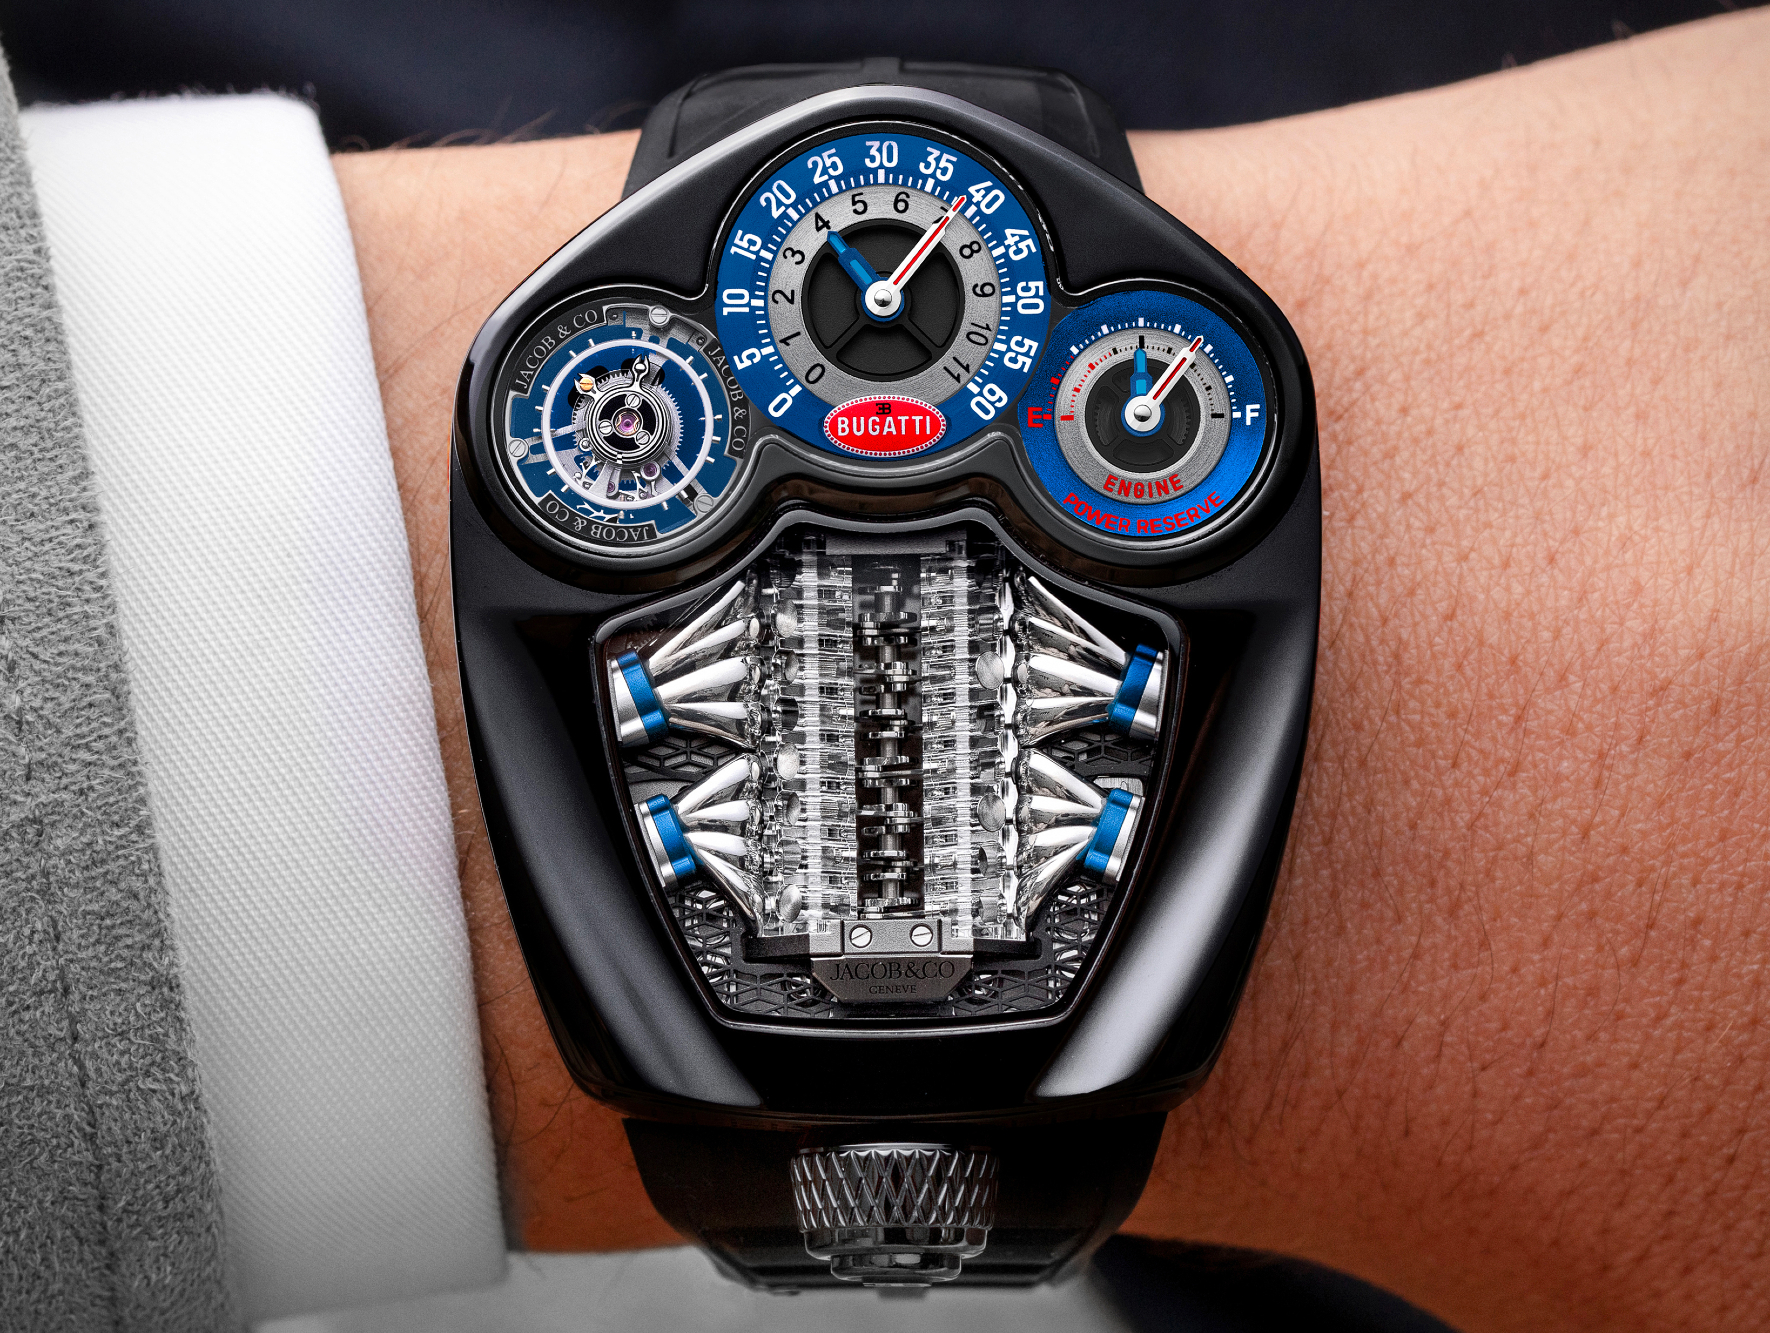 Bugatti Tourbillon limited edition watch on a wrist.